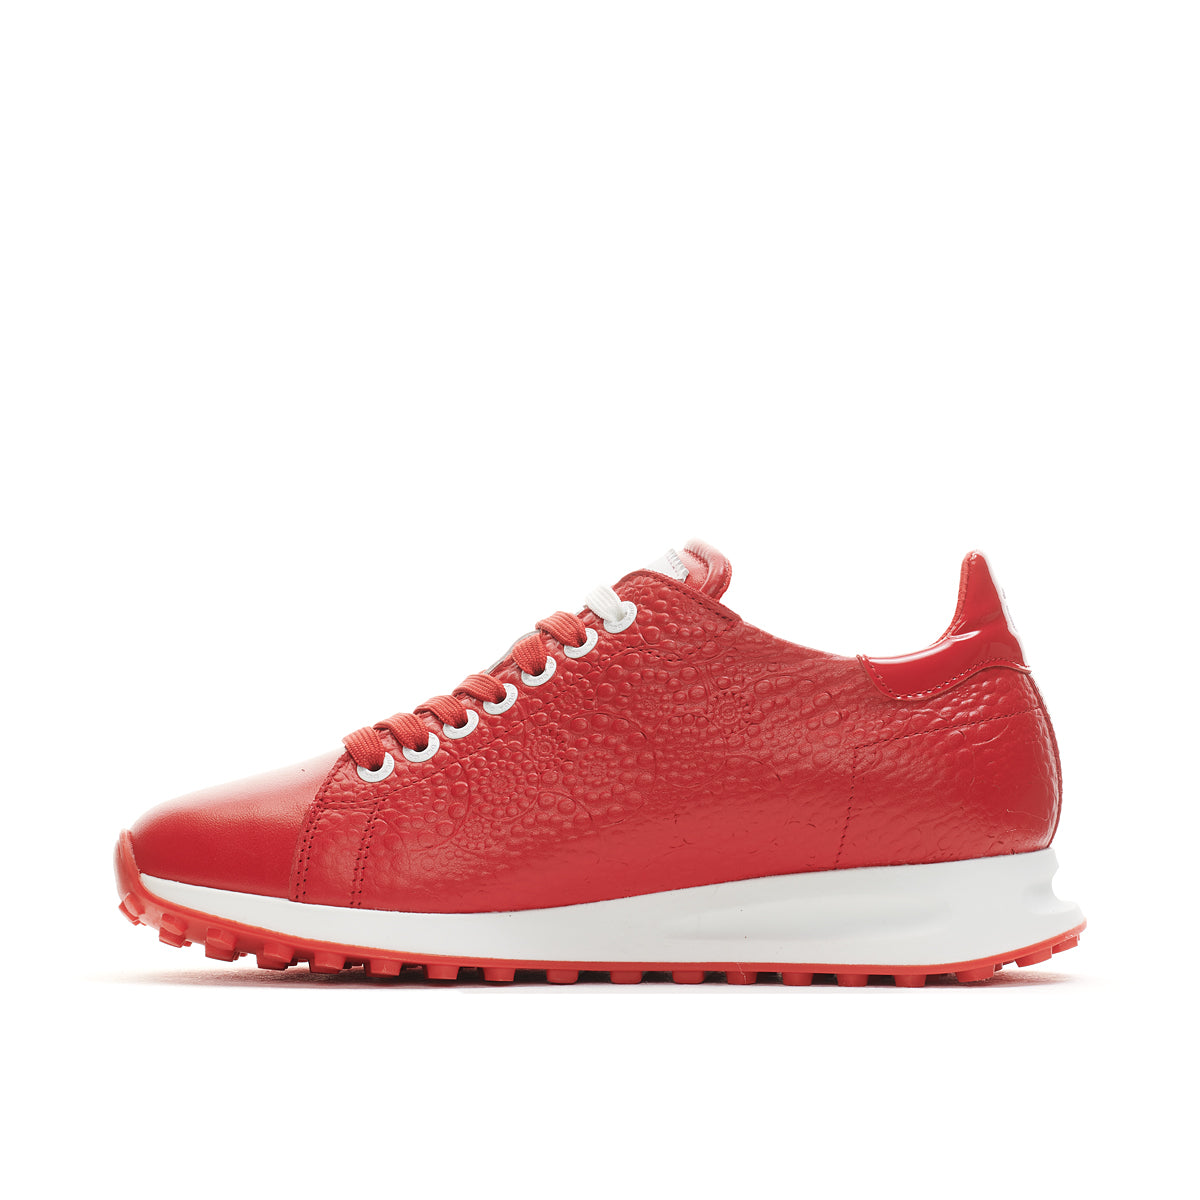 Atlantis Red - Women's Golf Shoes 